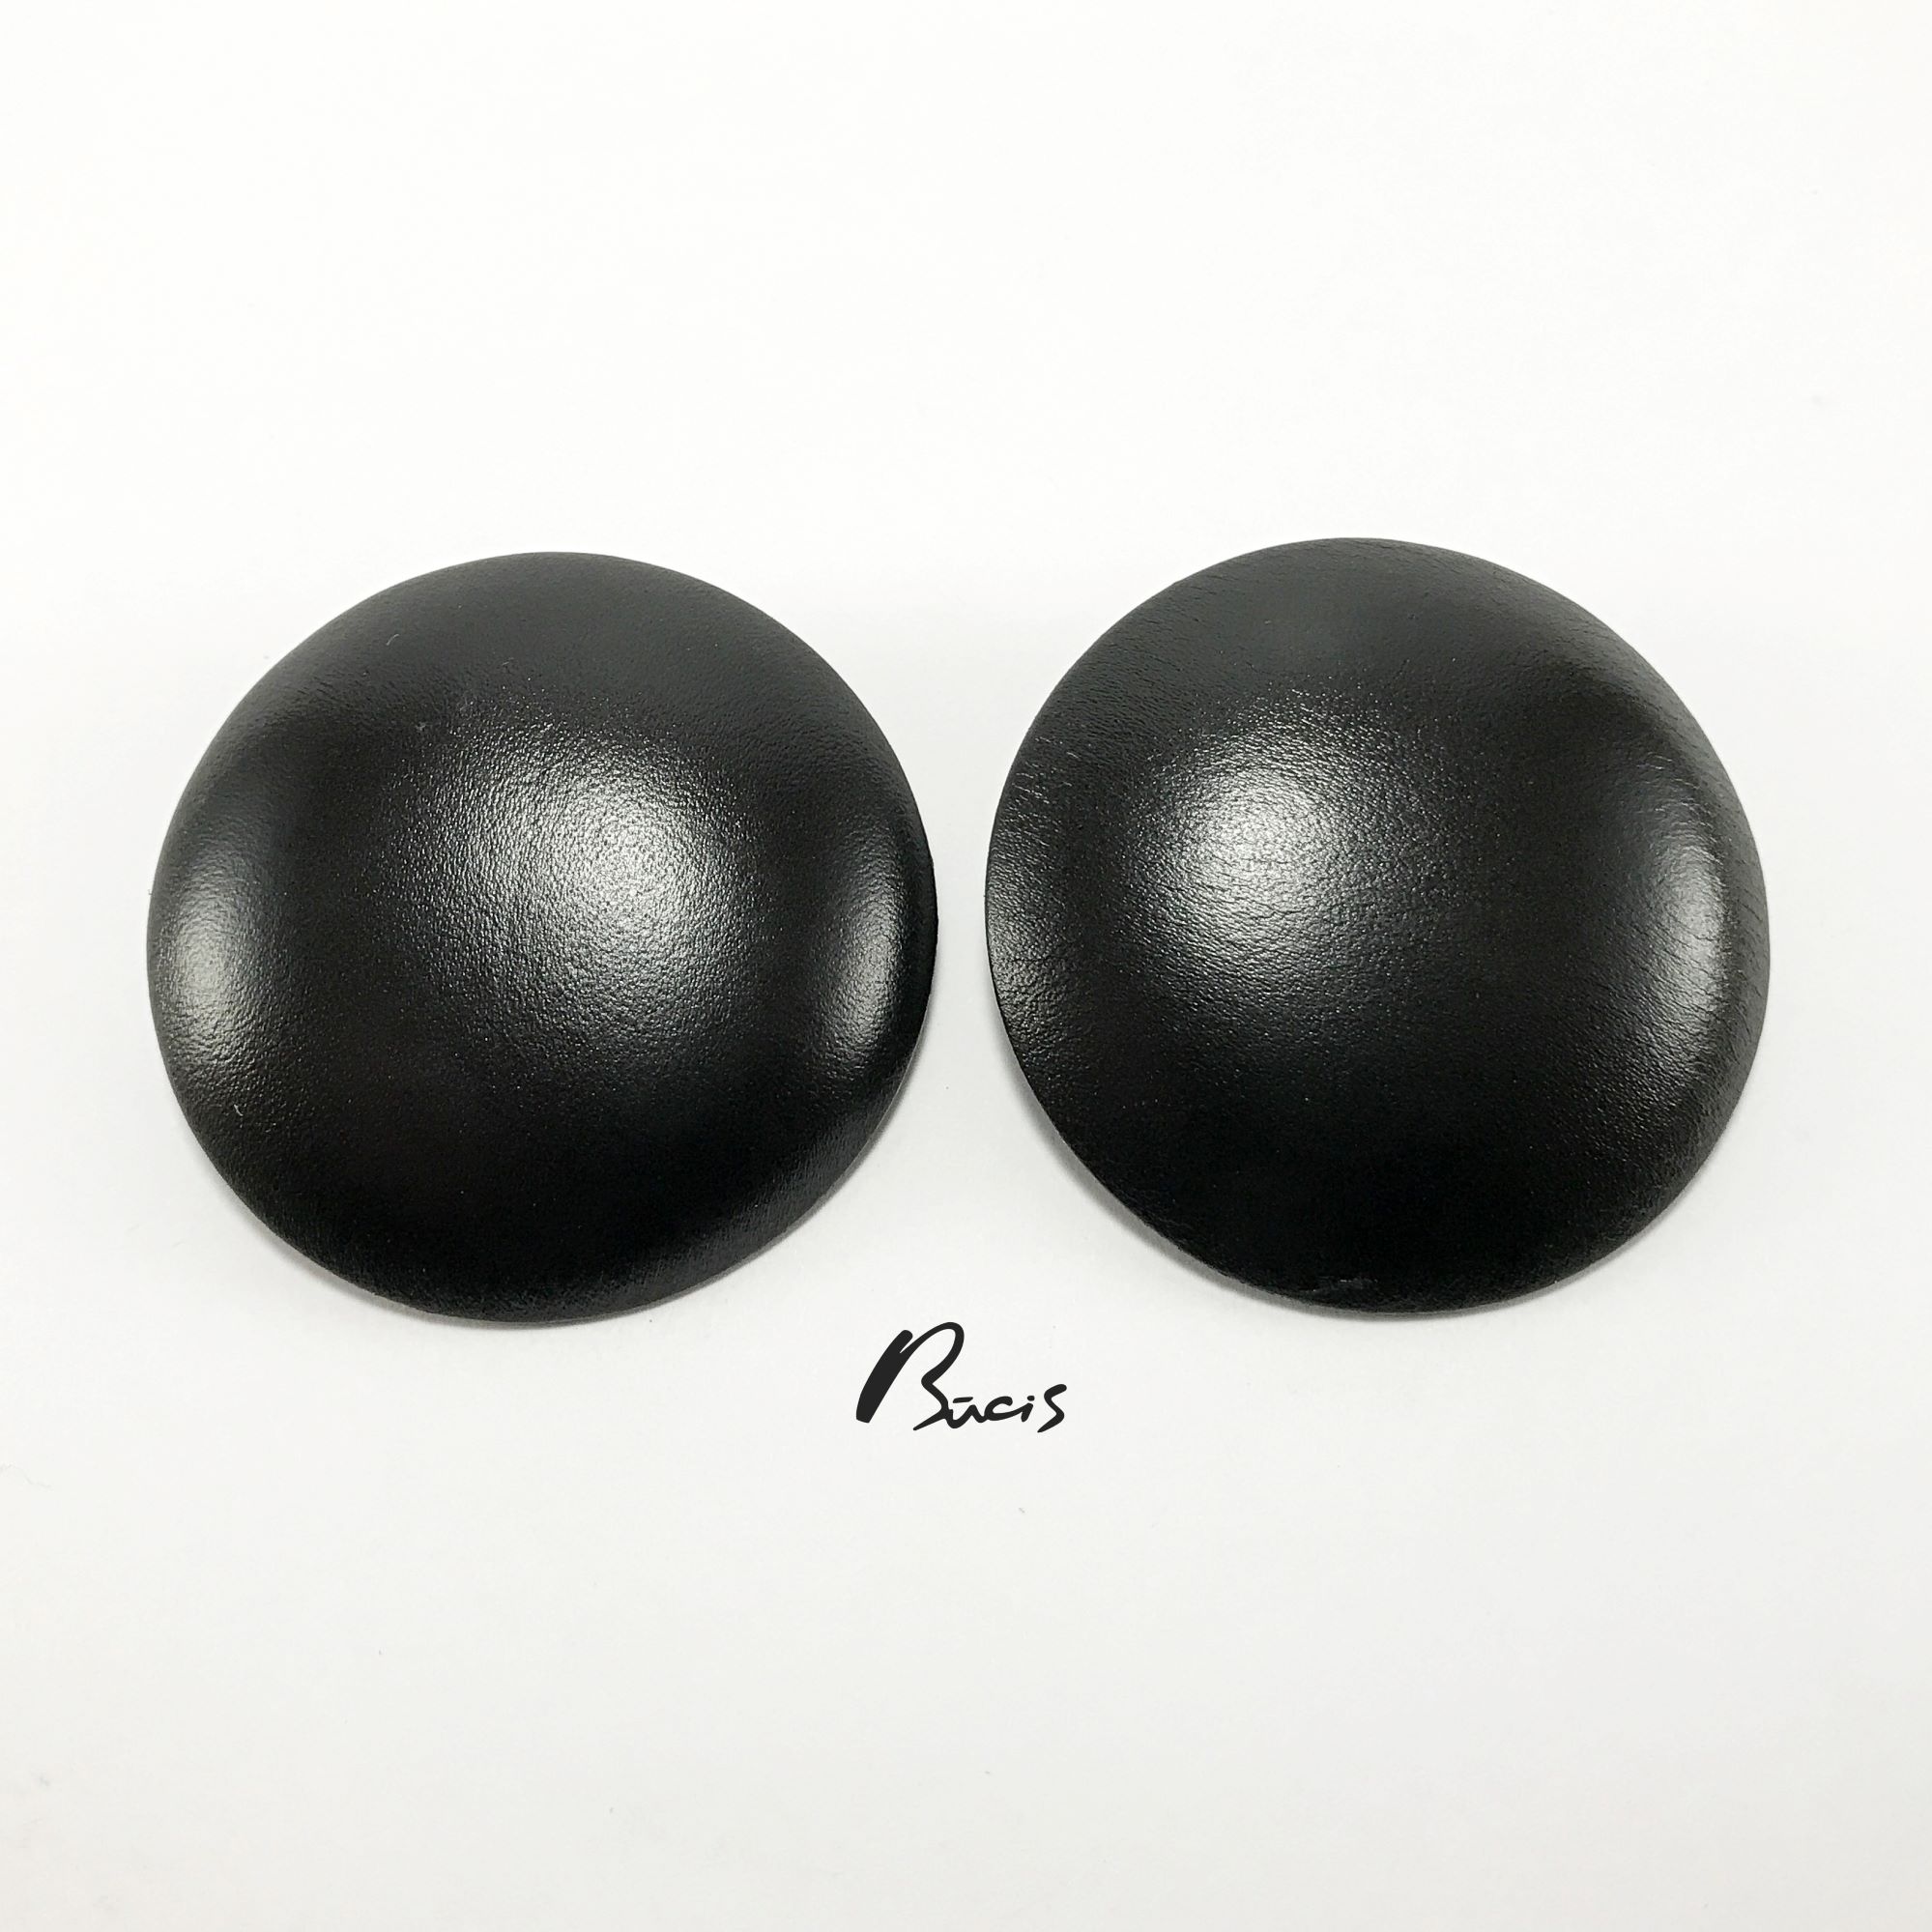 Leather earrings black large Bucis